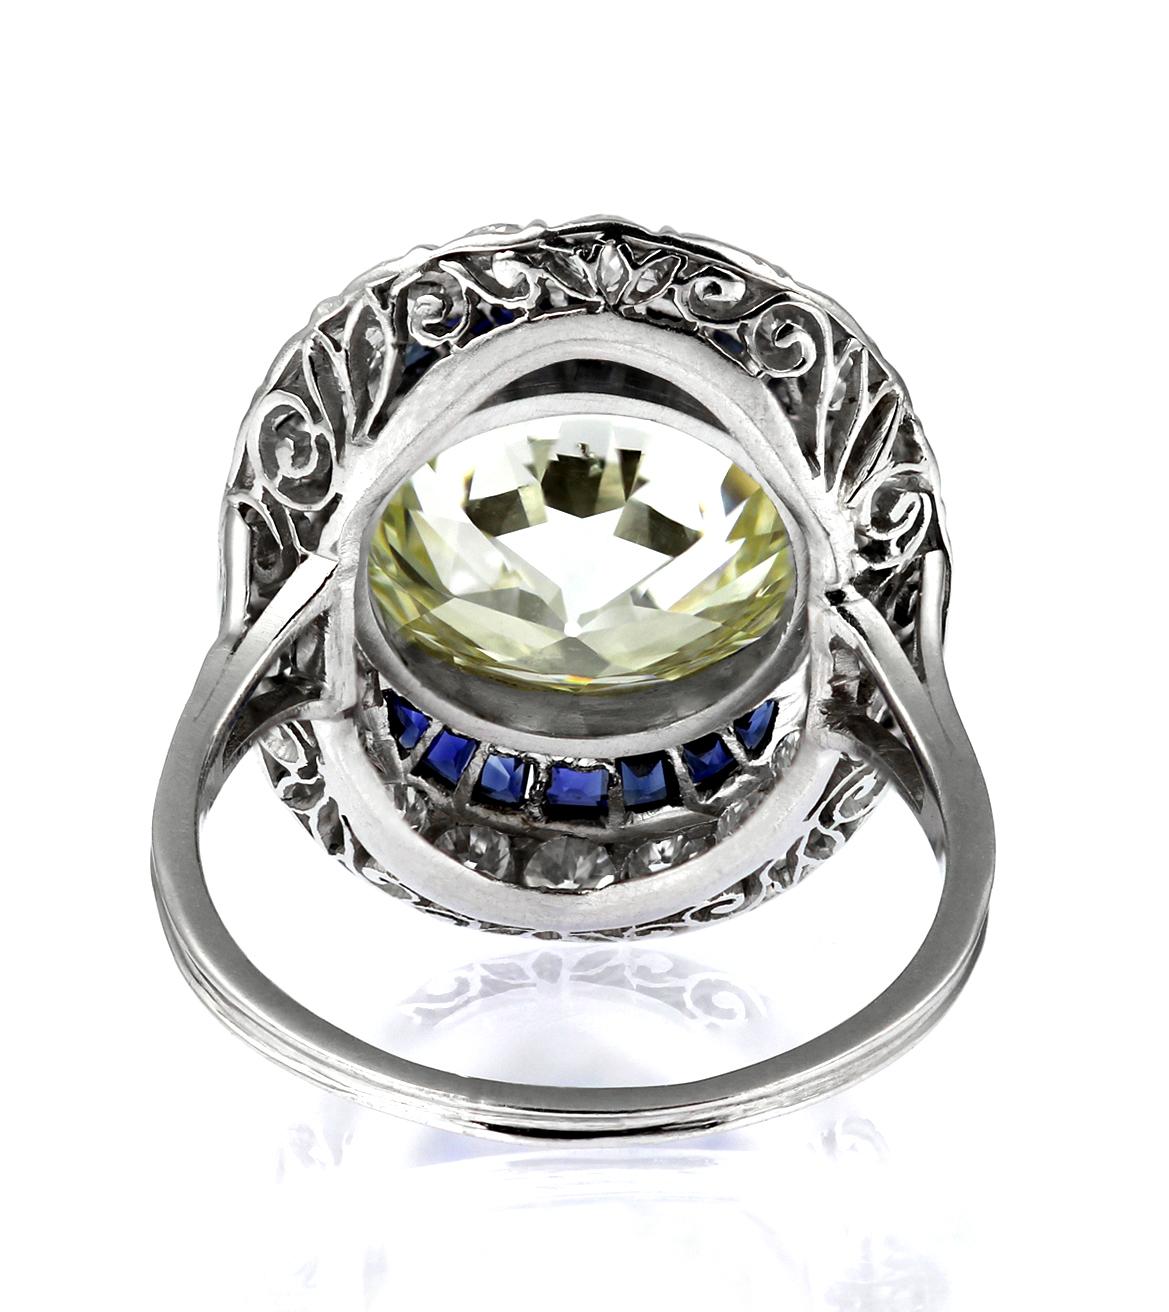 Women's Antique Big Diamond 6.6 ct with Sapphire Ring in Platinum